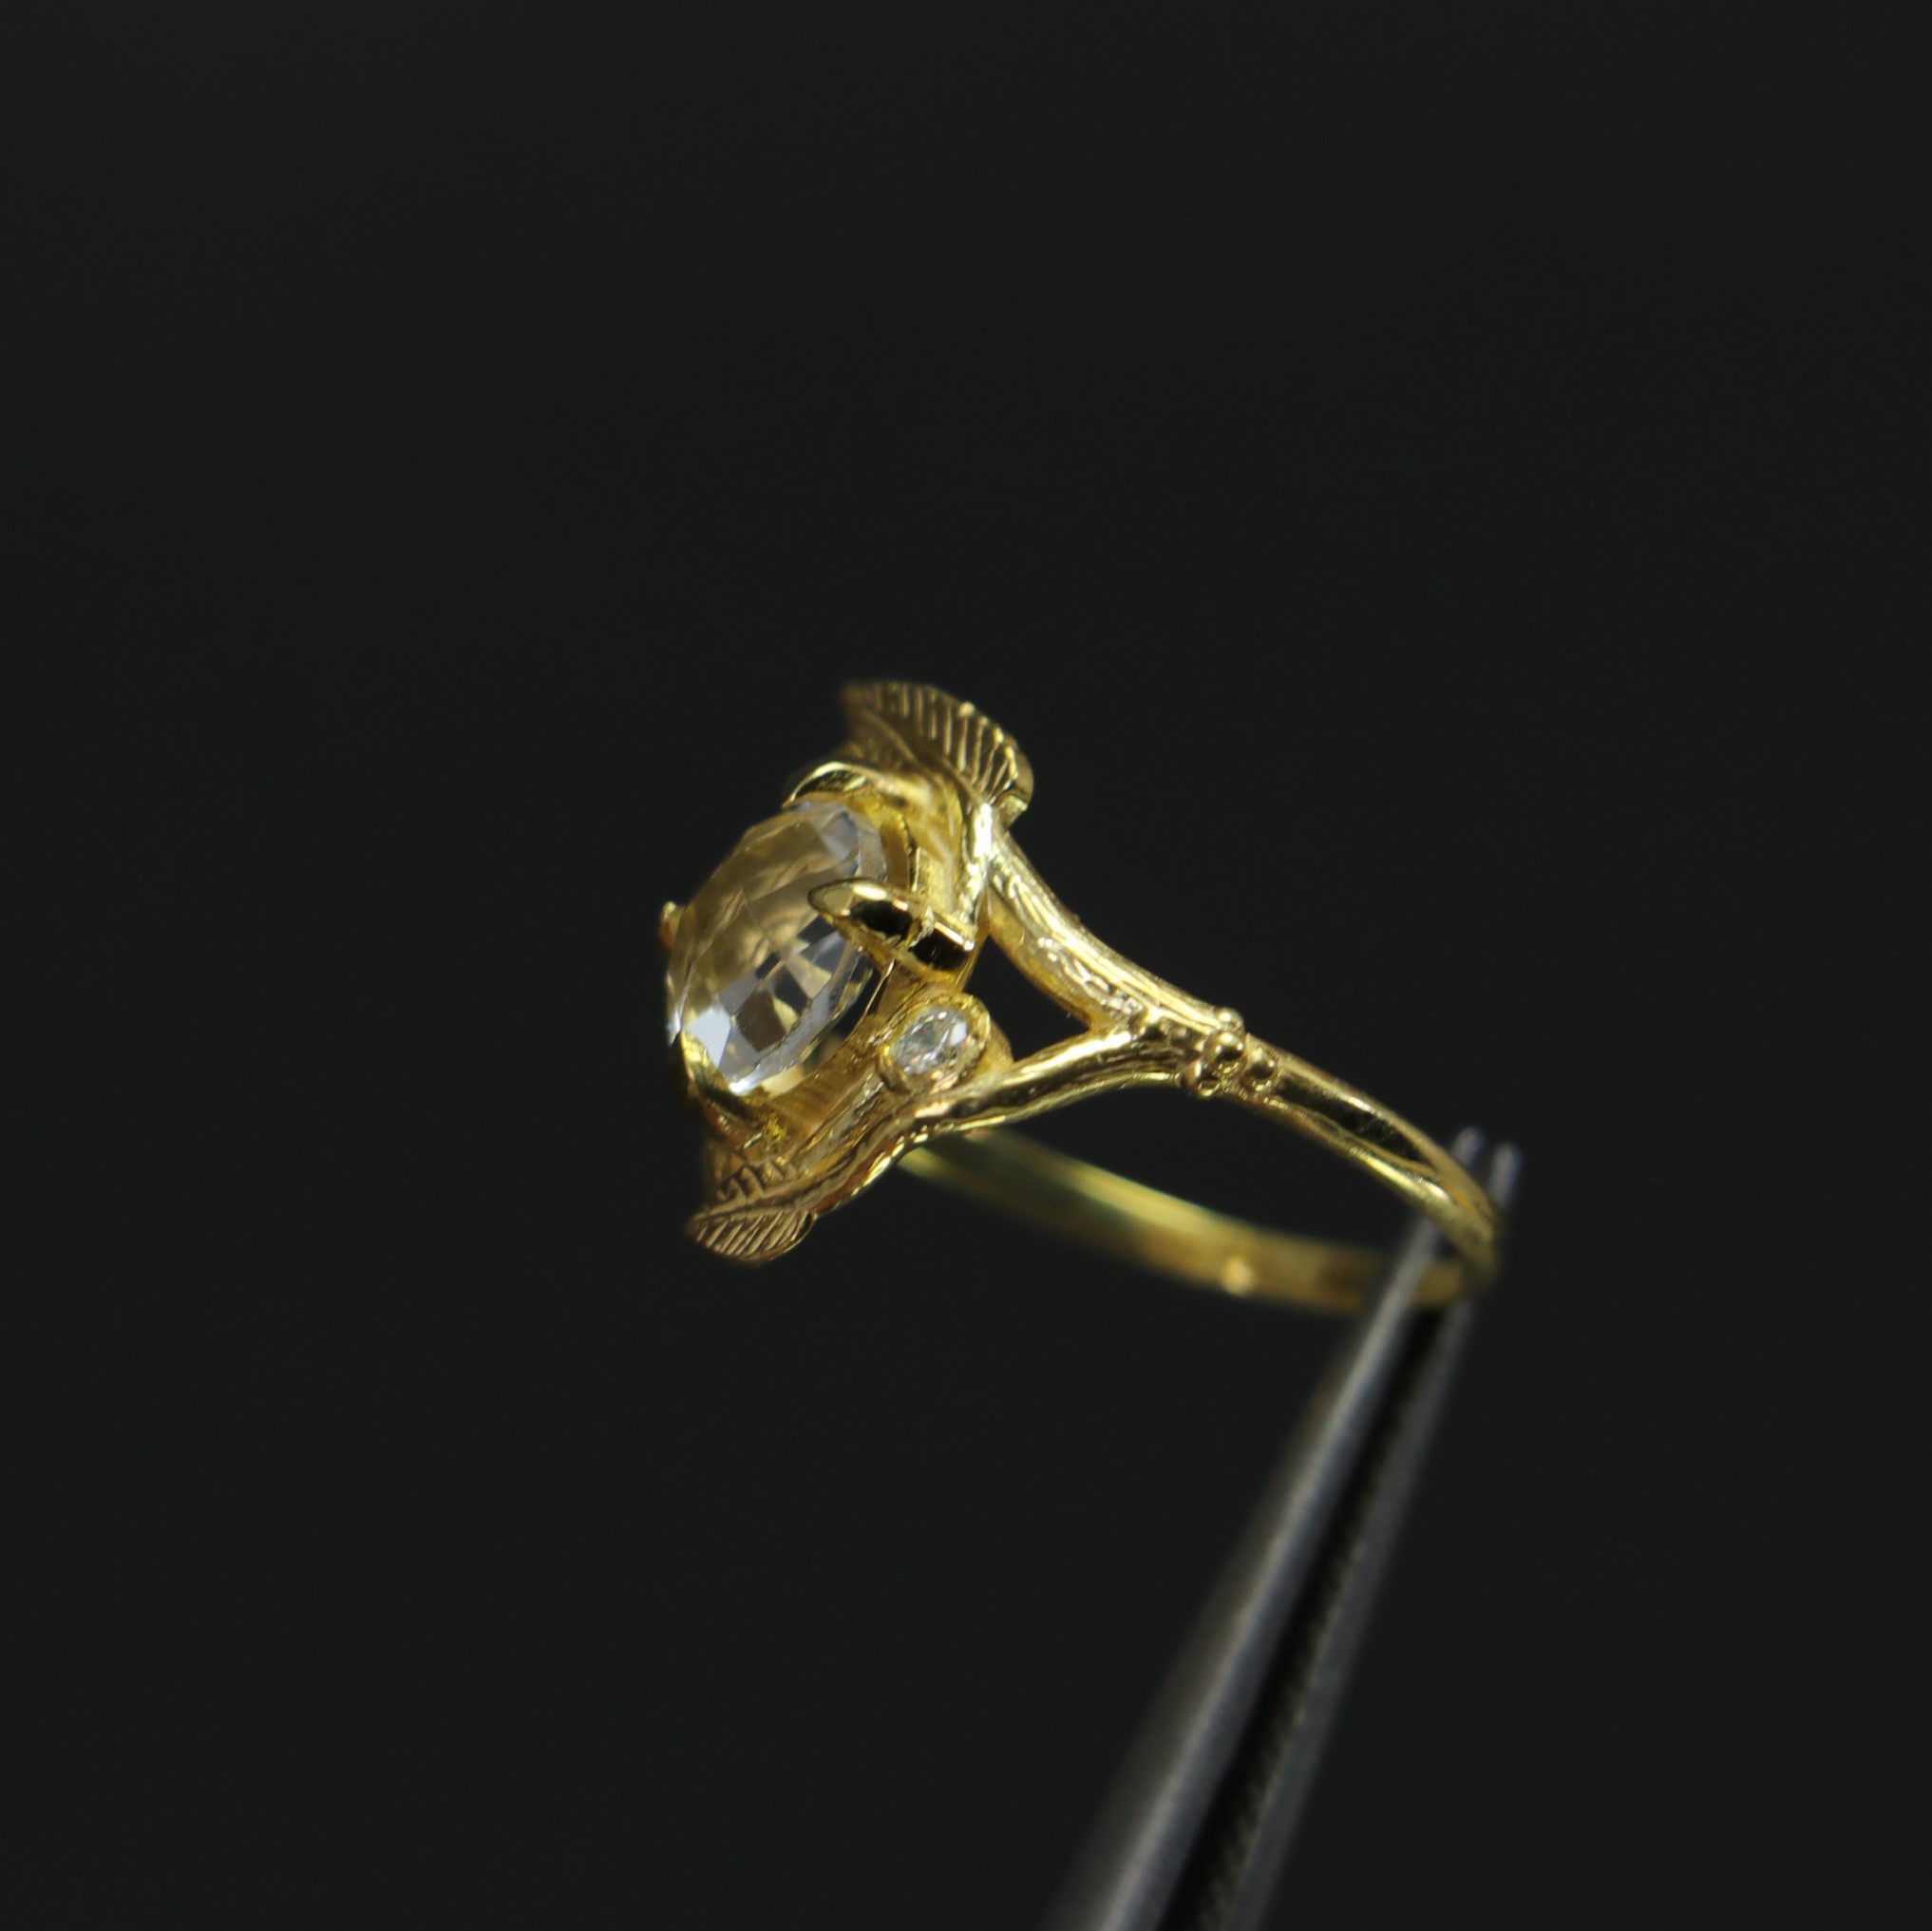 Swarovski Stone Gold Plated 925 Sterling Silver Ring